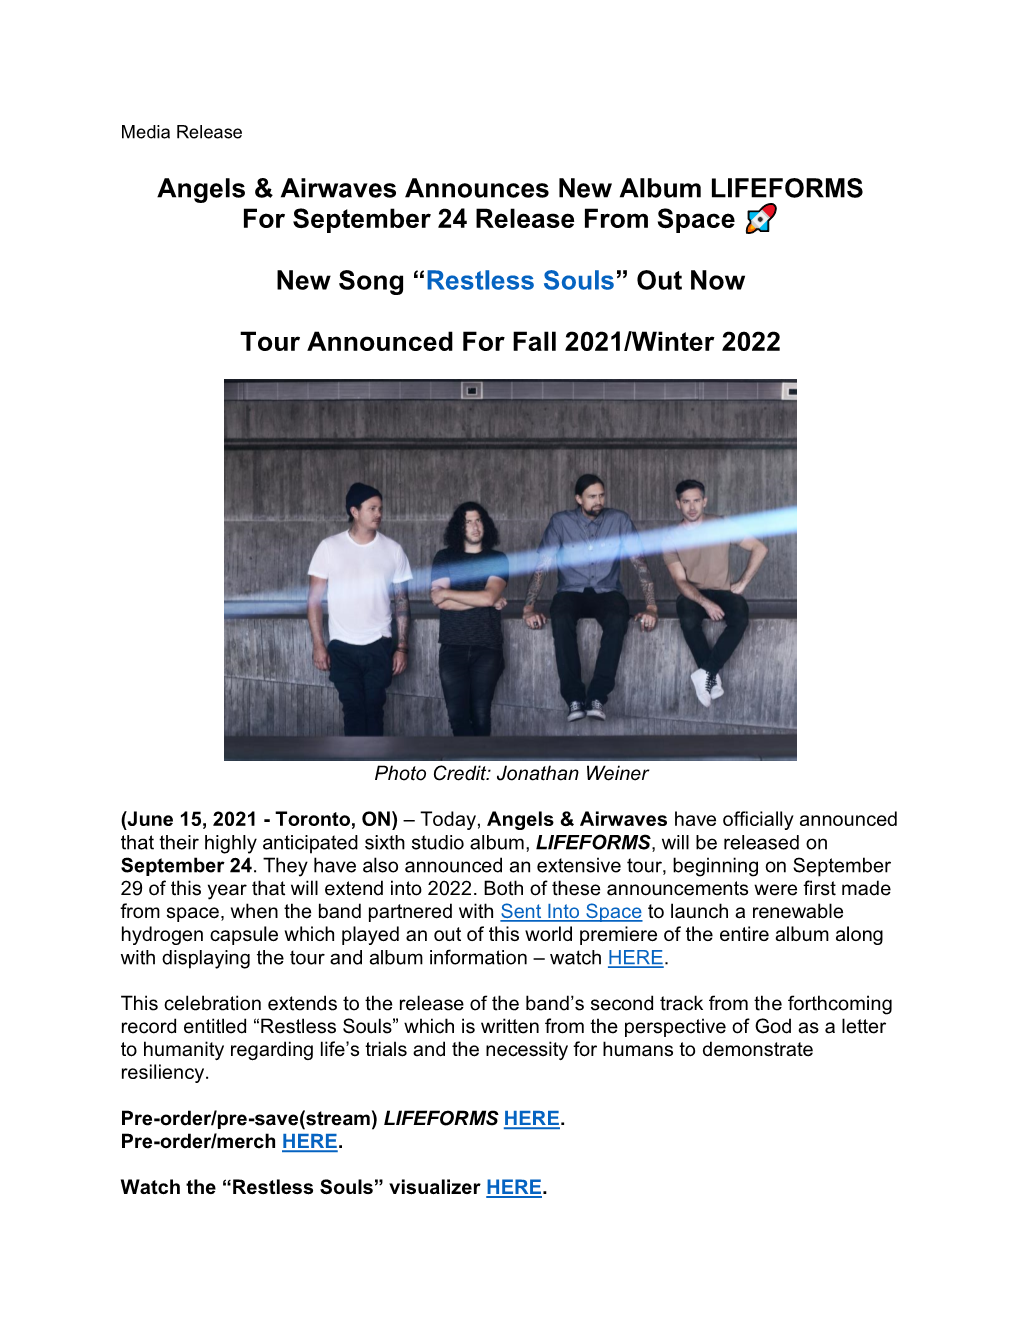 Angels & Airwaves Announces New Album Lifeforms for September 24